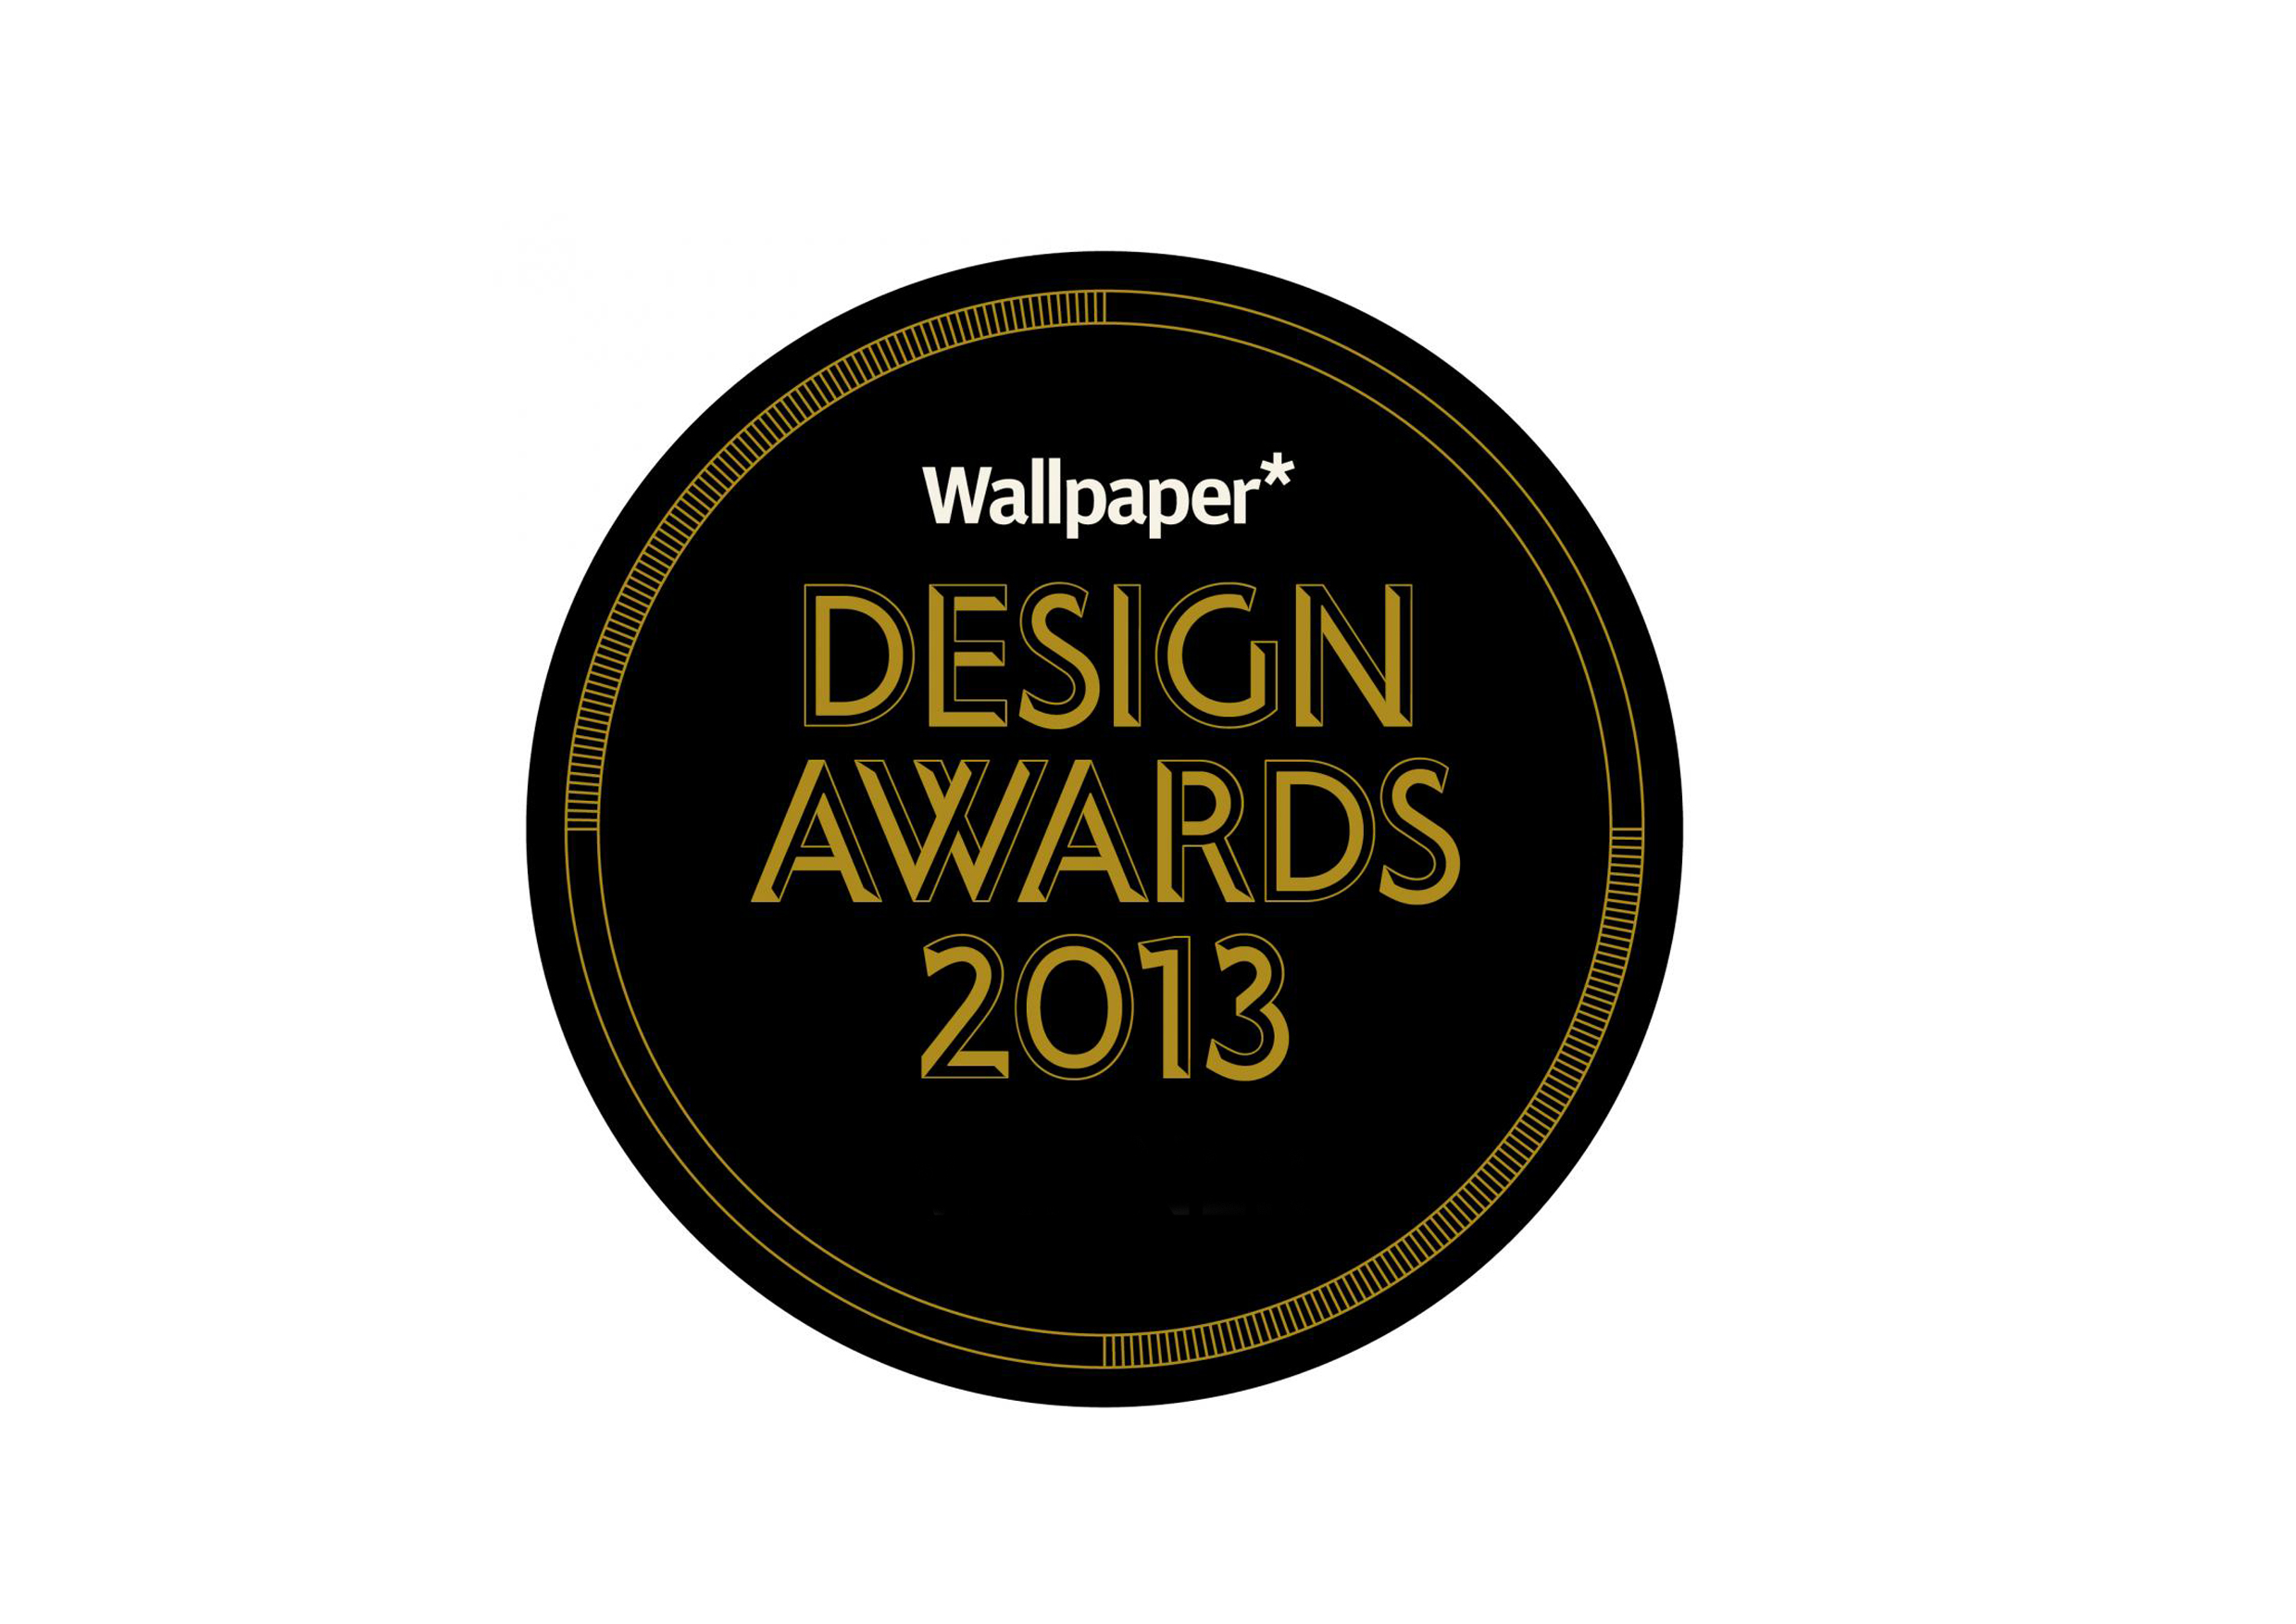 Wallpaper* Design Awards